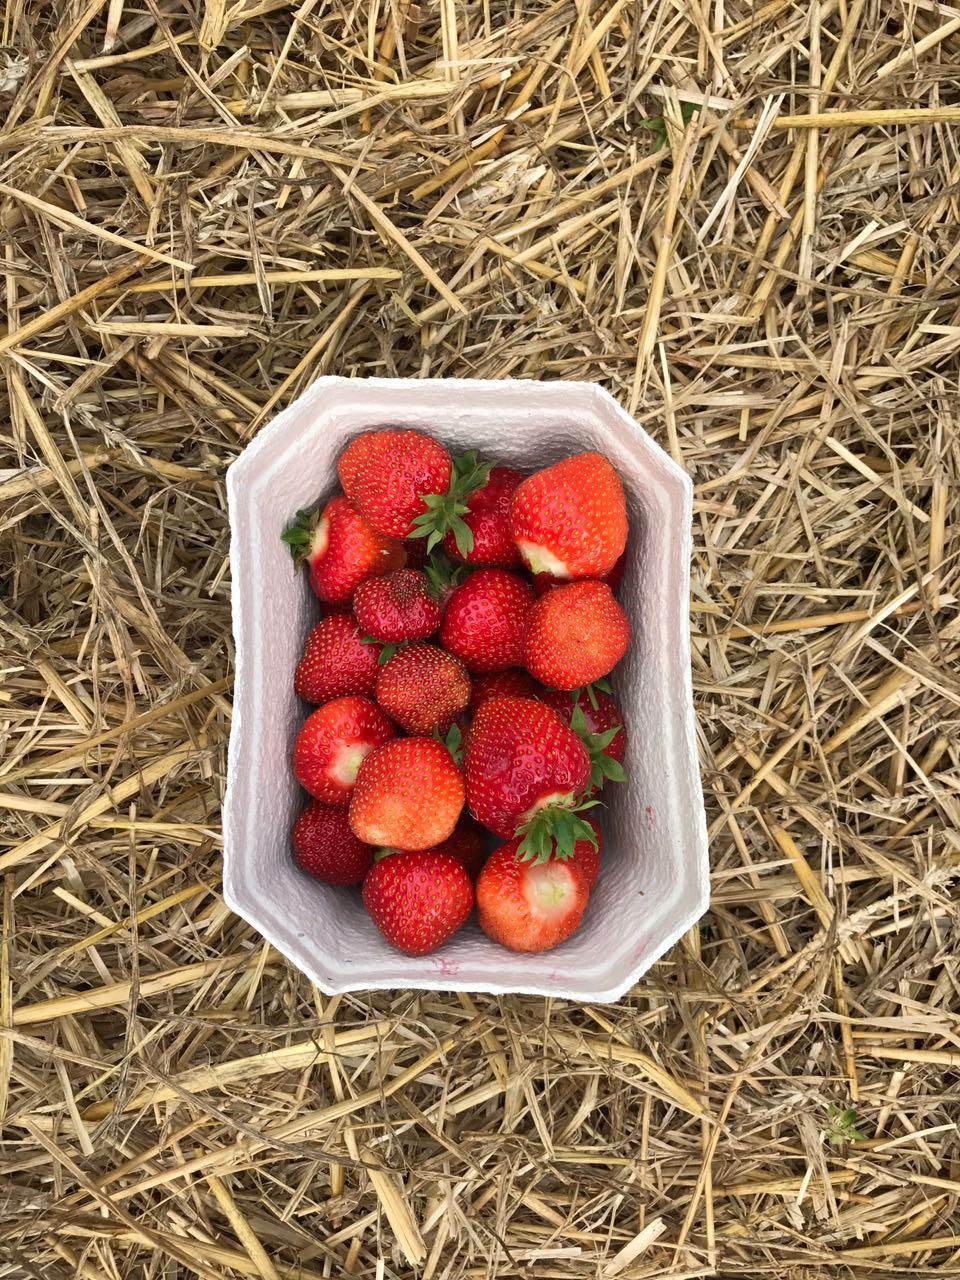 Sommerzeit ist Erdbeerzeit. #erdbeere #abinsgruene #foodlover #rot